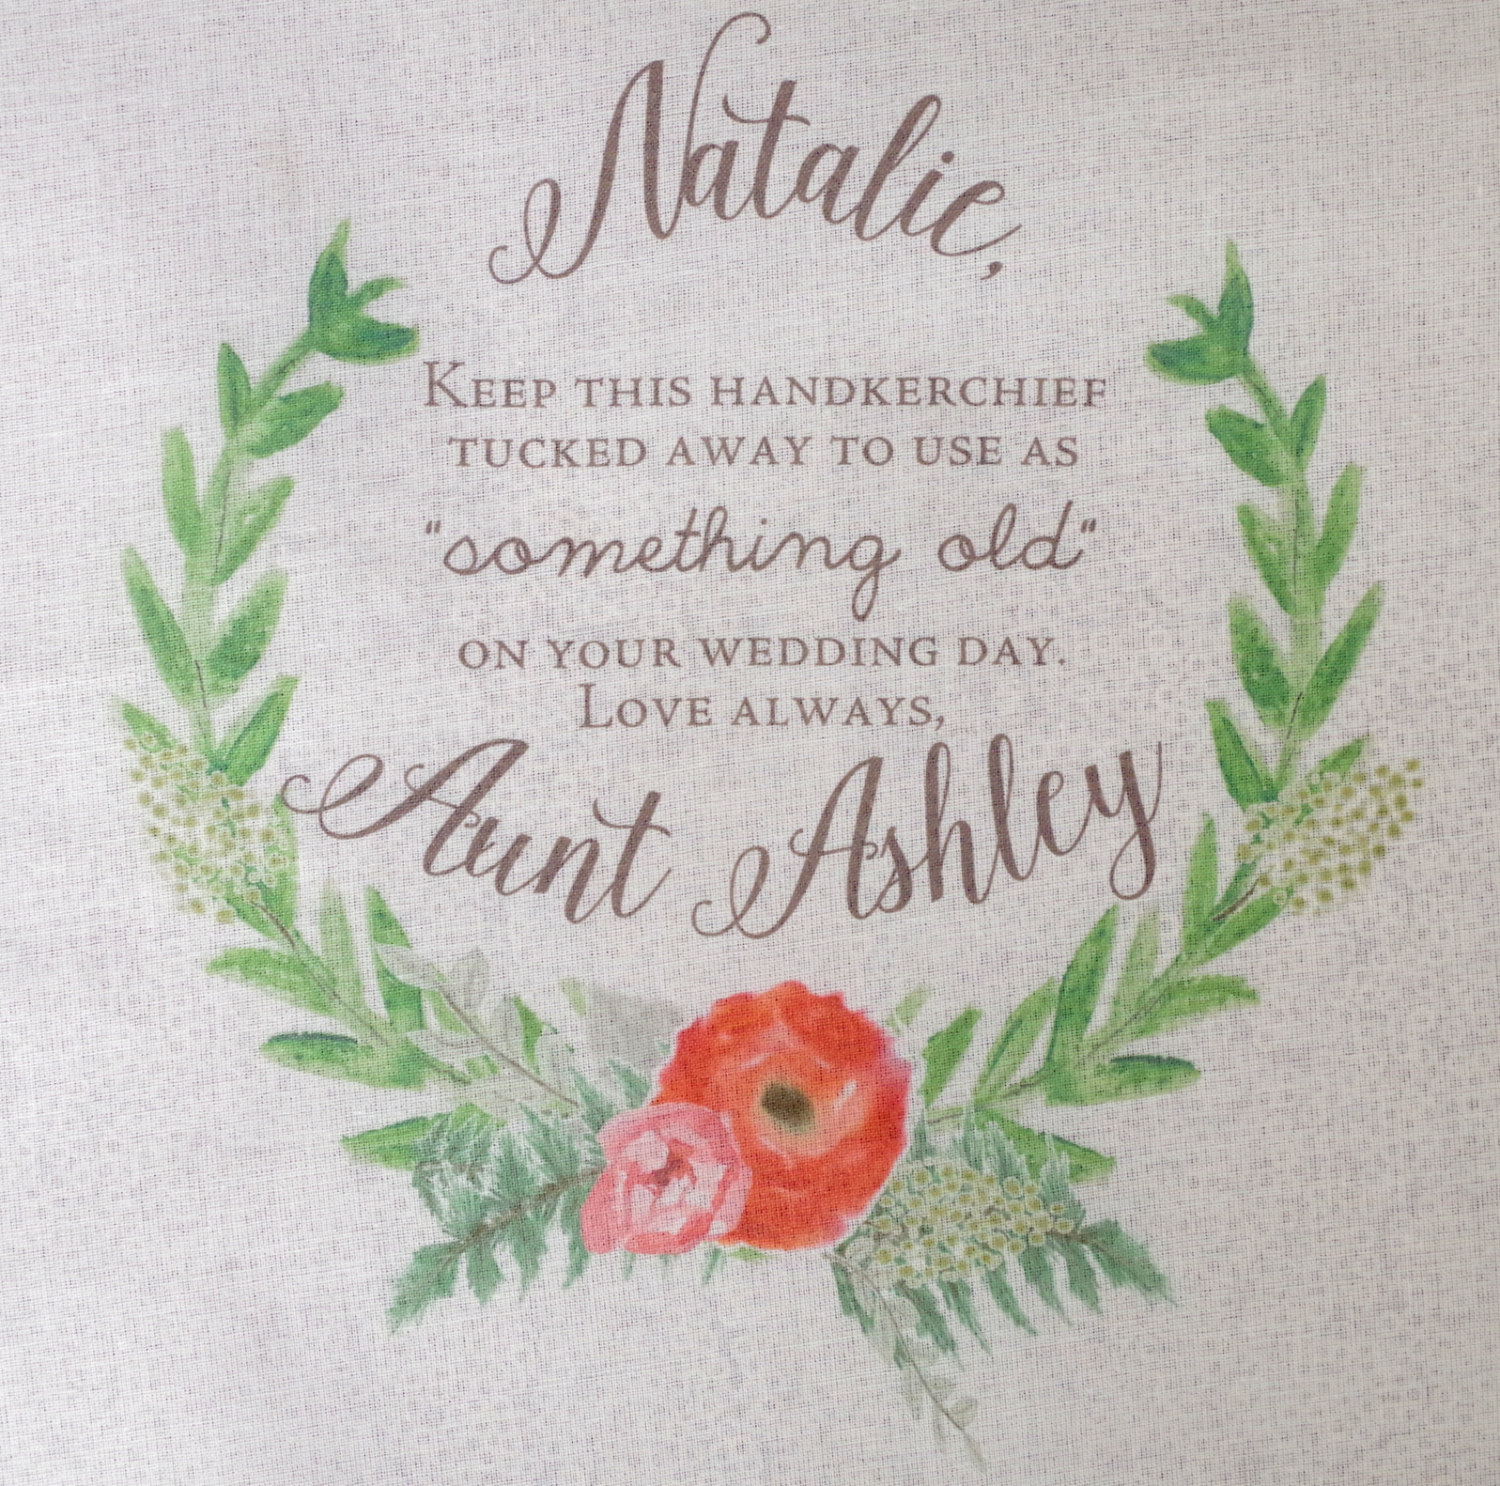 cute something old handkerchief | personalized wedding handkerchiefs | https://emmalinebride.com/gifts/personalized-wedding-handkerchiefs/